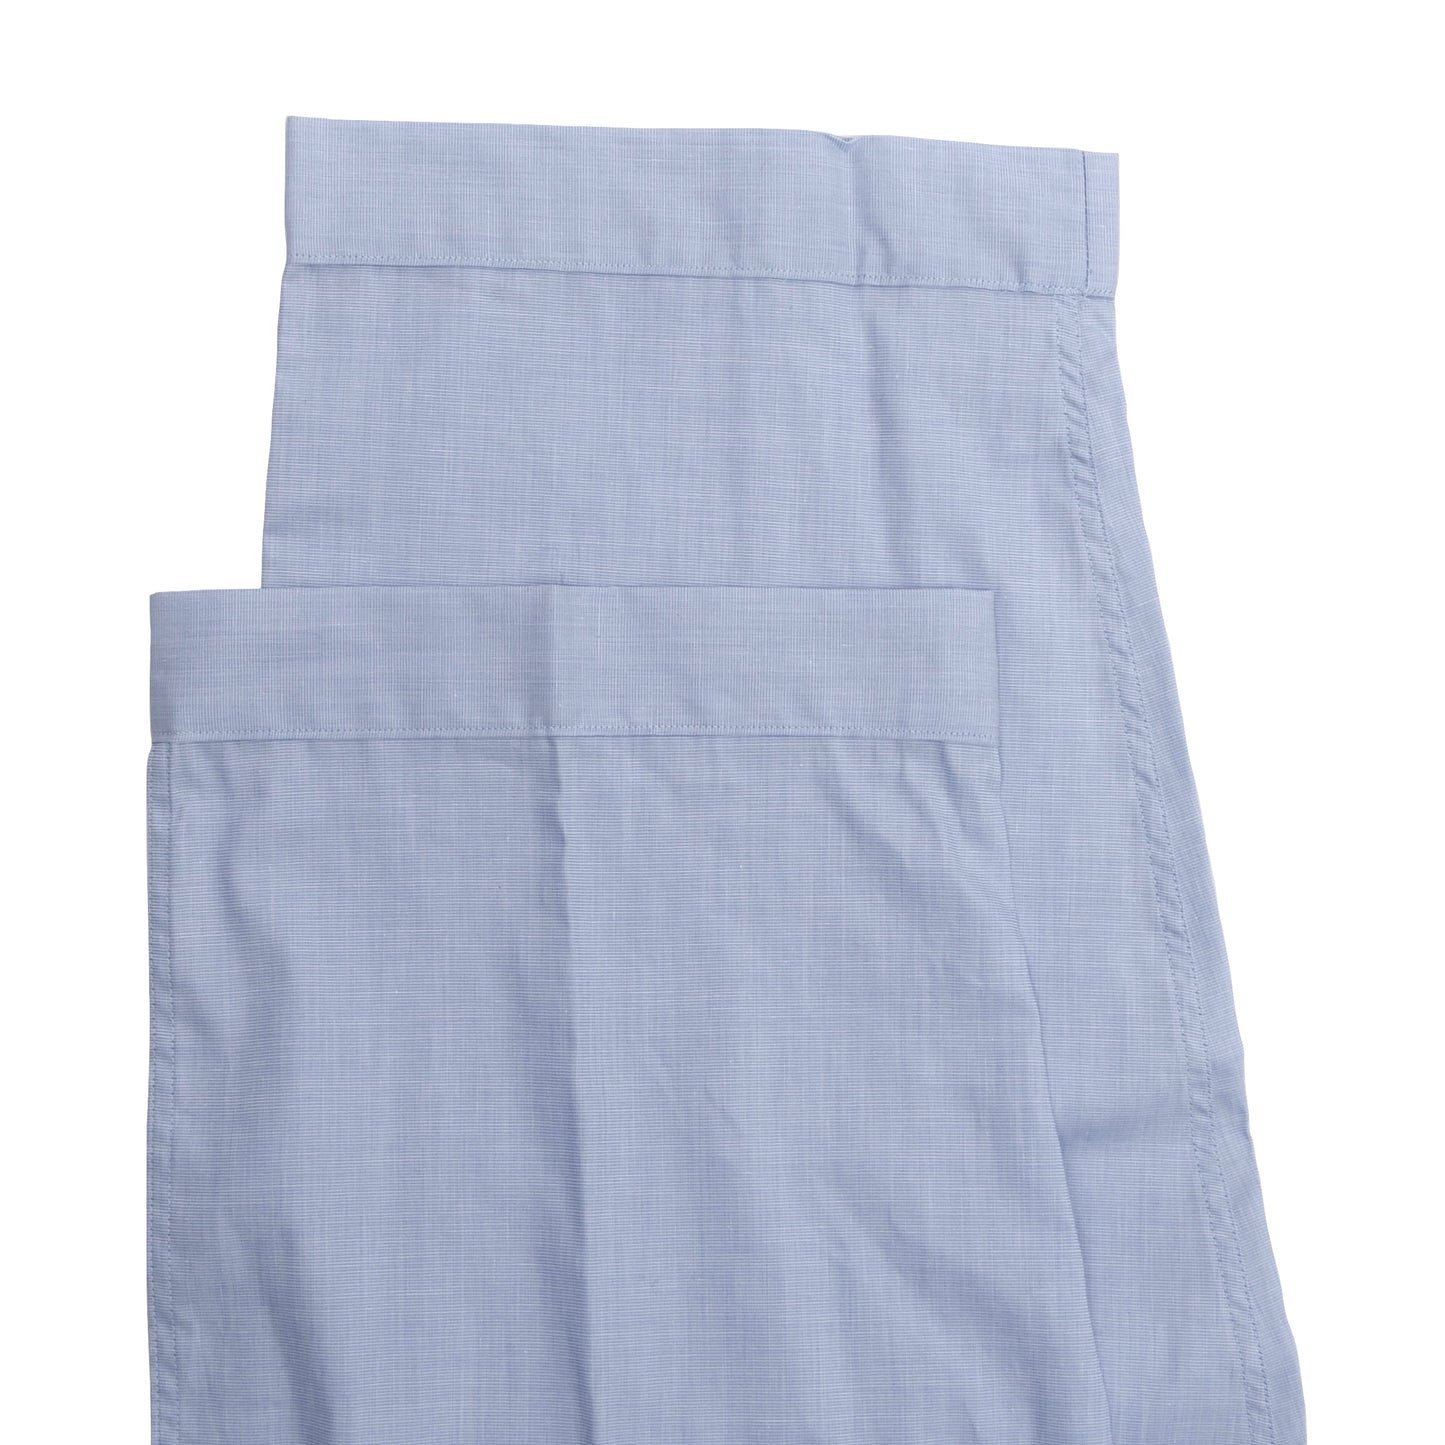 Novila Cotton Pyjama Panys Größe 60 - Hellblau